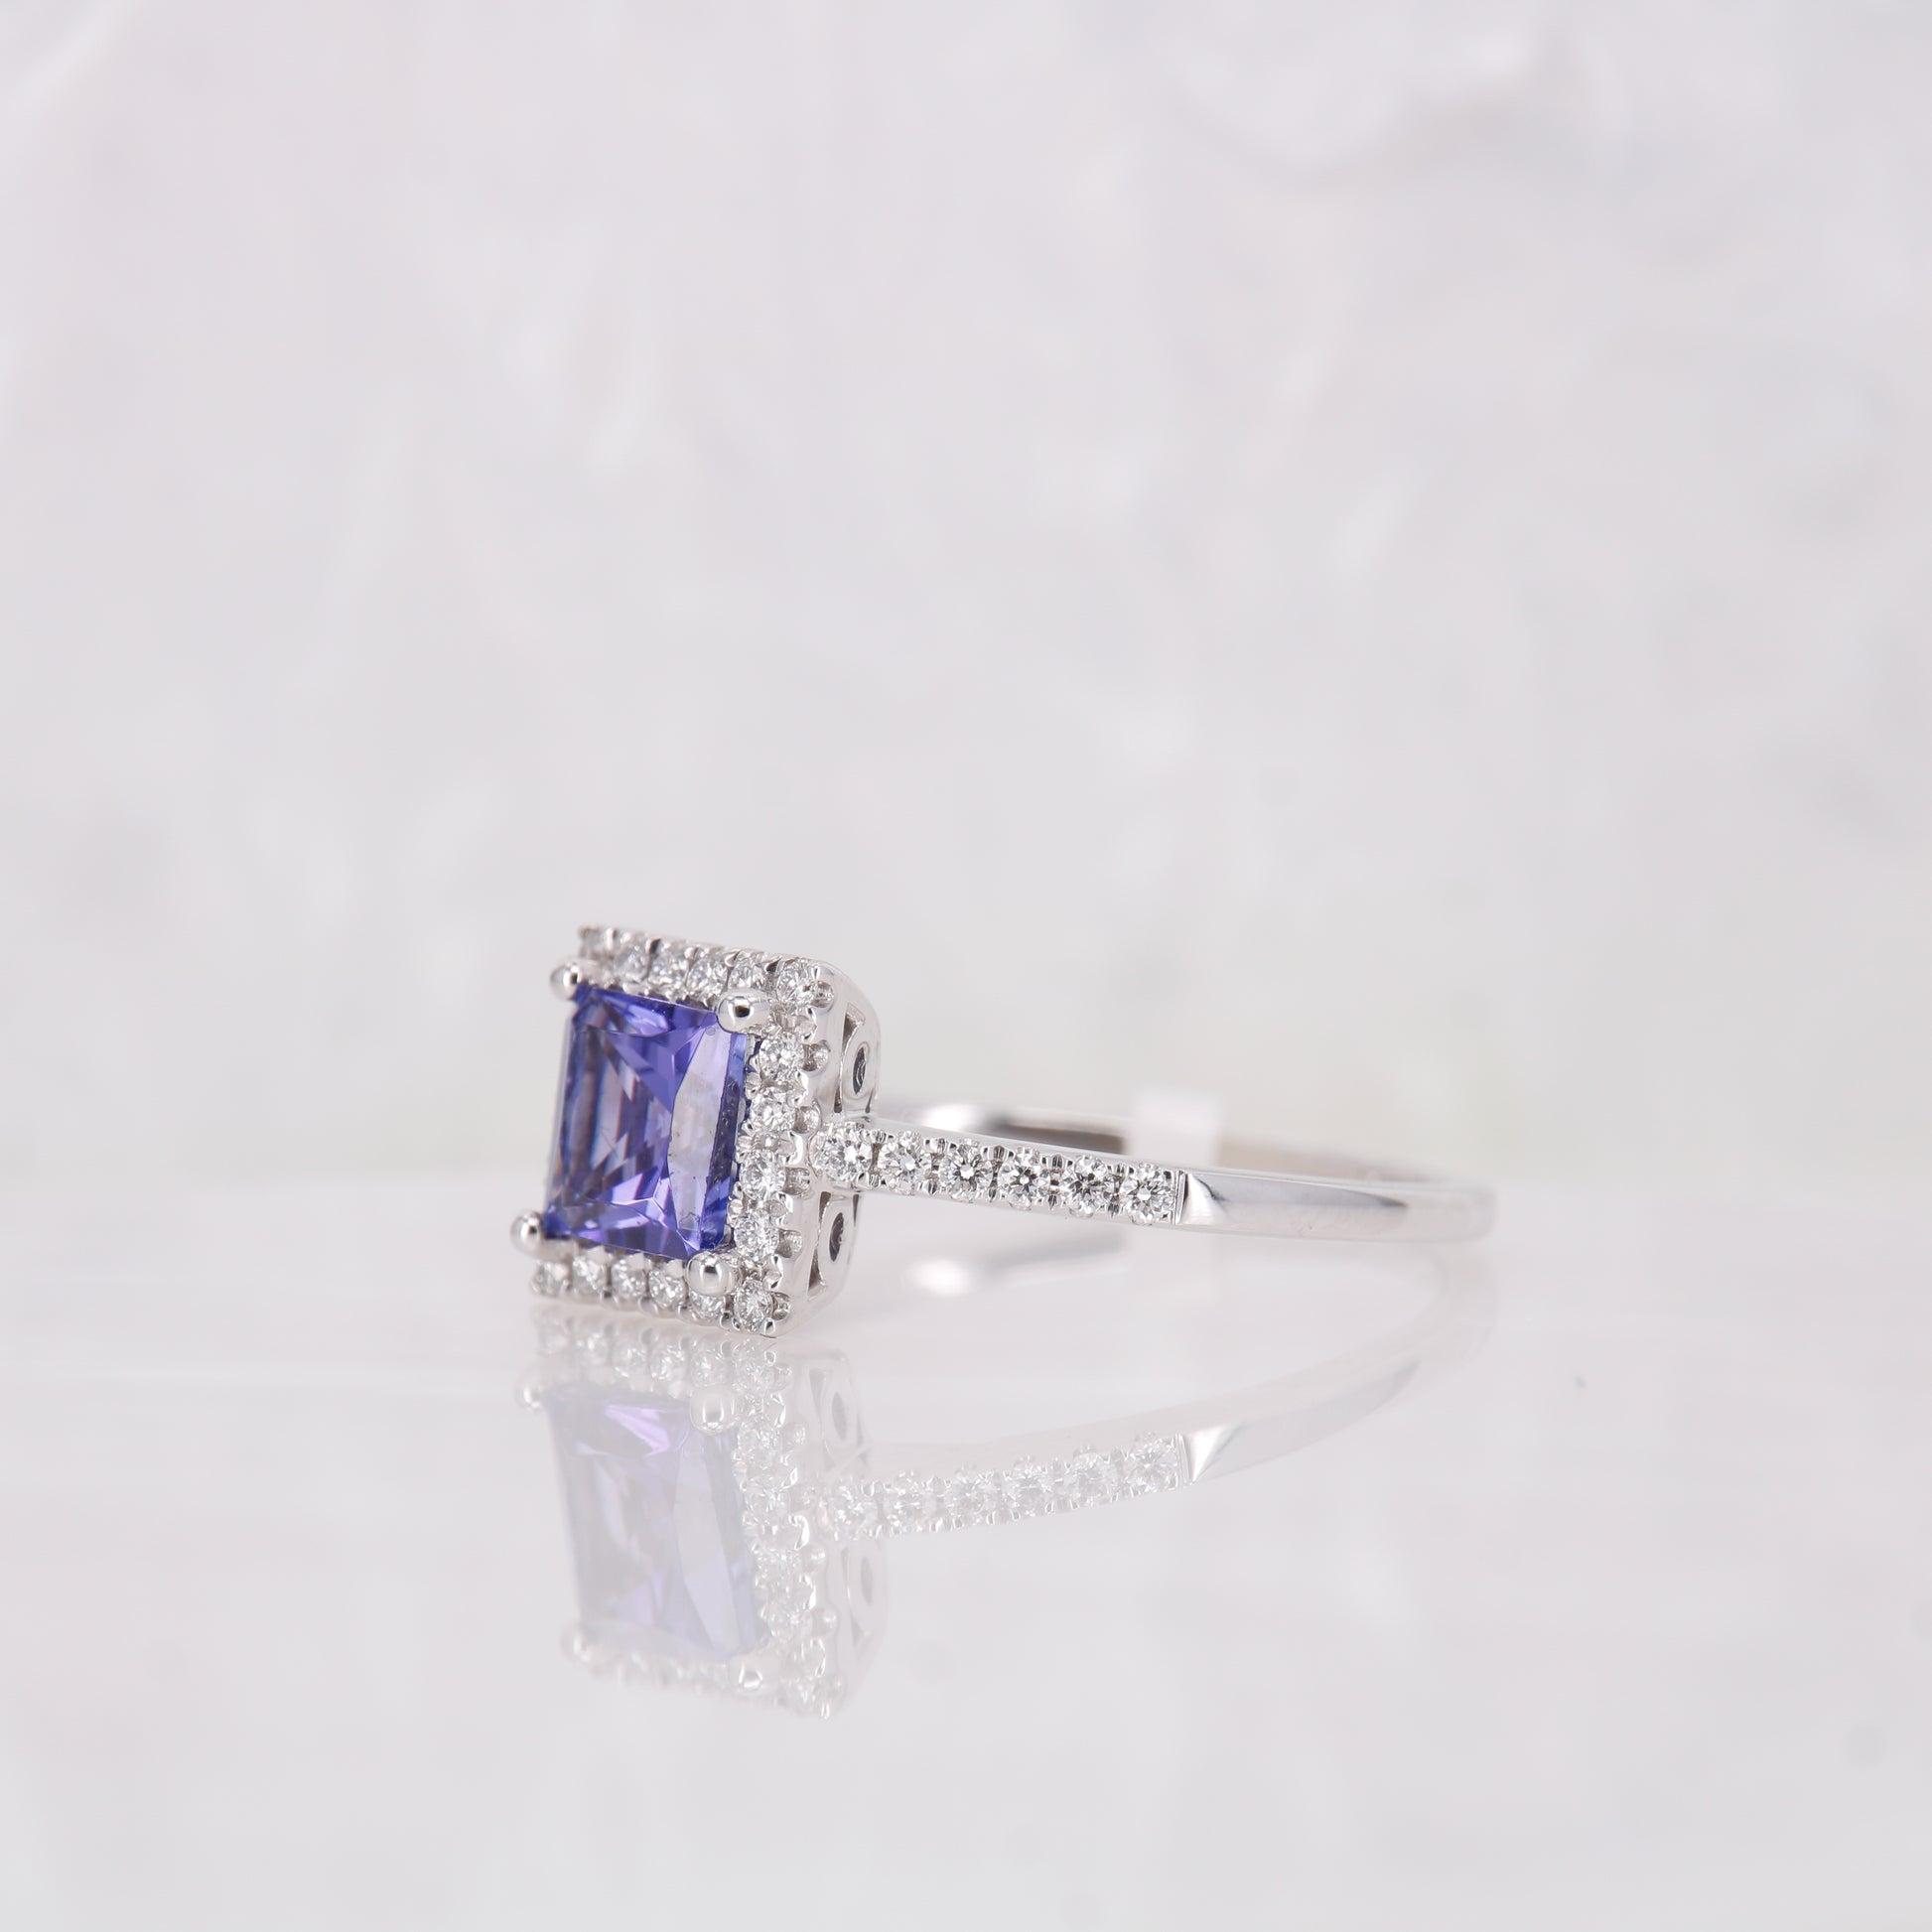 Tanzanite and Diamond Engagement Ring, set in 18ct white gold diamond halo. Princess cut tanzanite. 